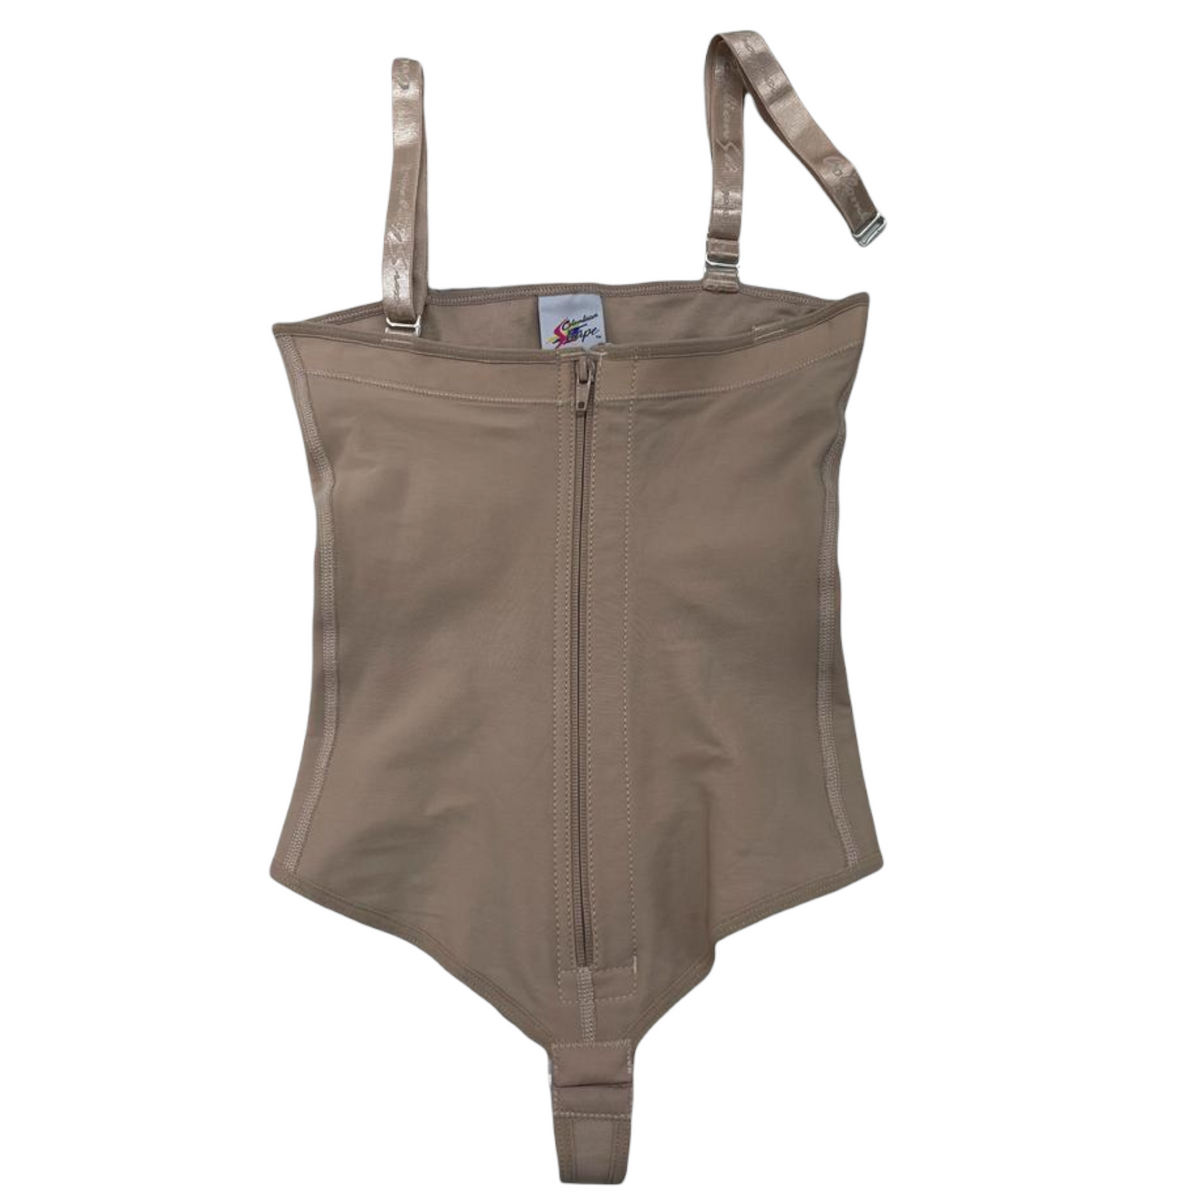 FINAL SALE CS683 Full Body Faja adjustable straps crotchless – Bonita Shape